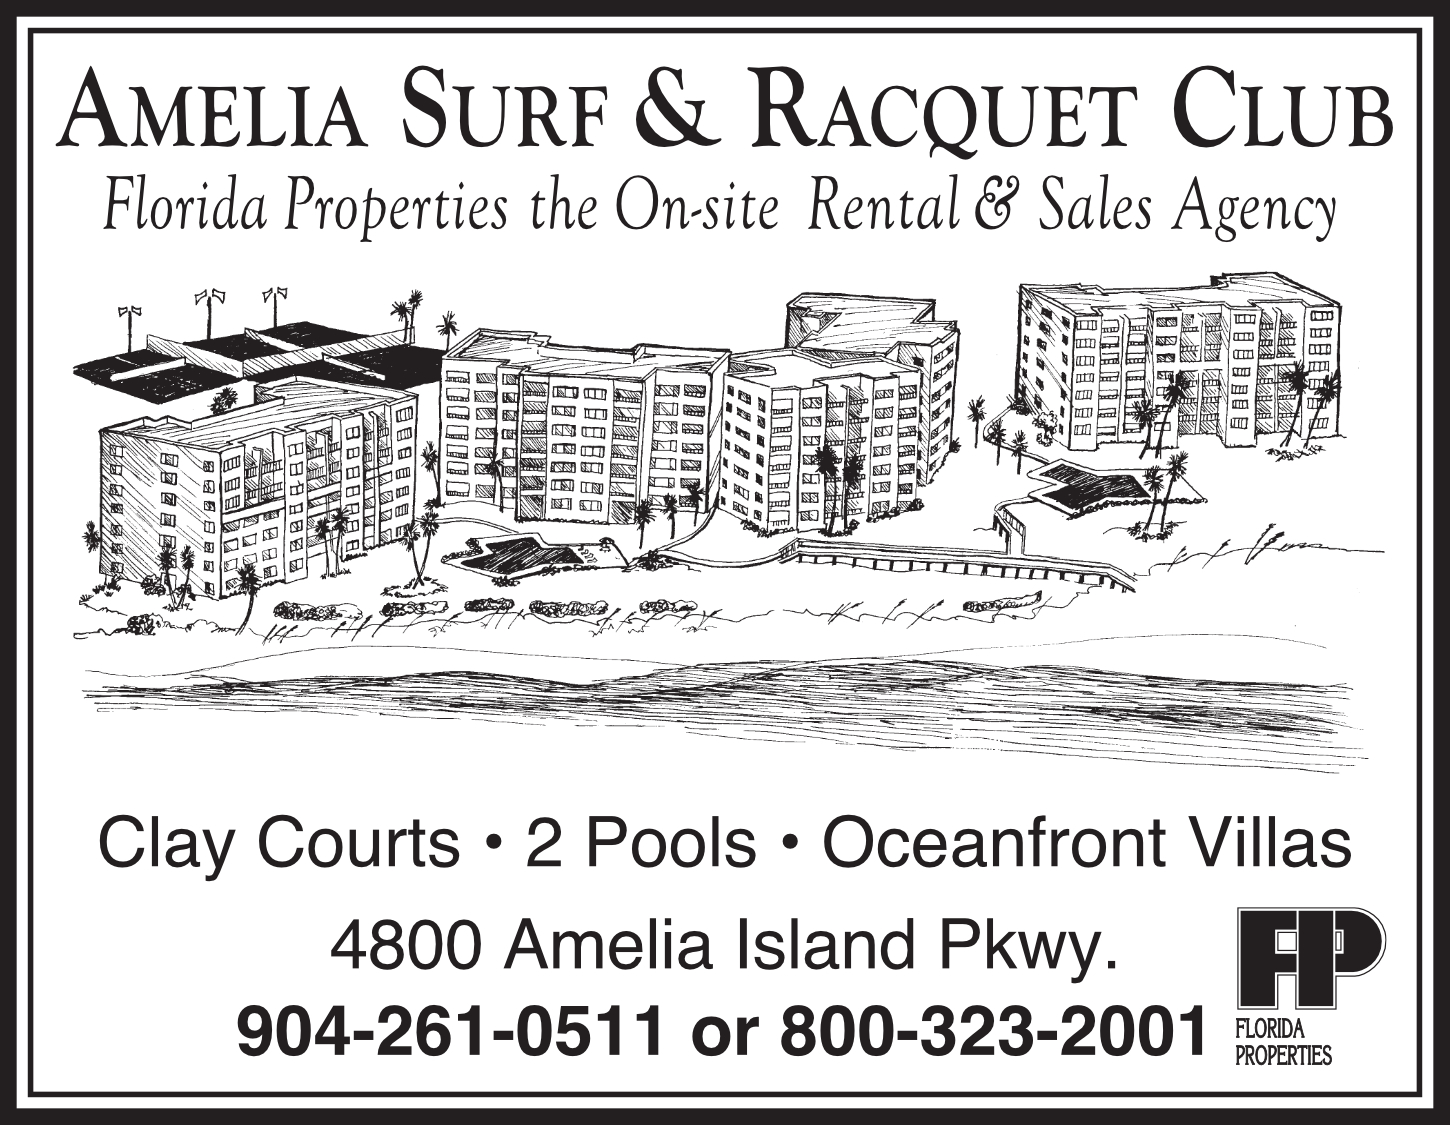 Florida Properties / Amelia Surf and Racquet Club